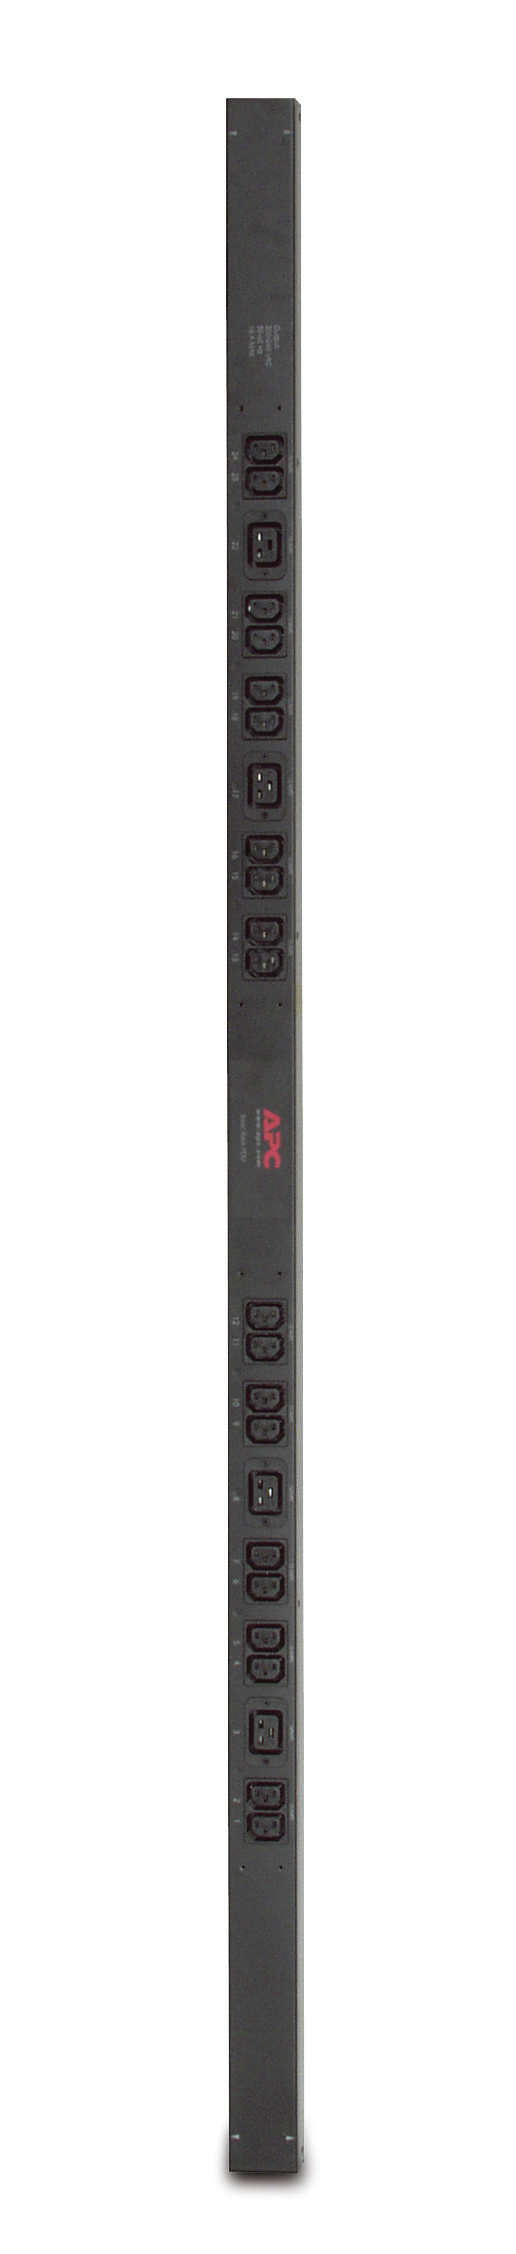 APC AP7554 - Rack PDU,Basic,ZeroU,16A,230V,(20)C13 & (4)C19, IEC309, 10 ft Cord